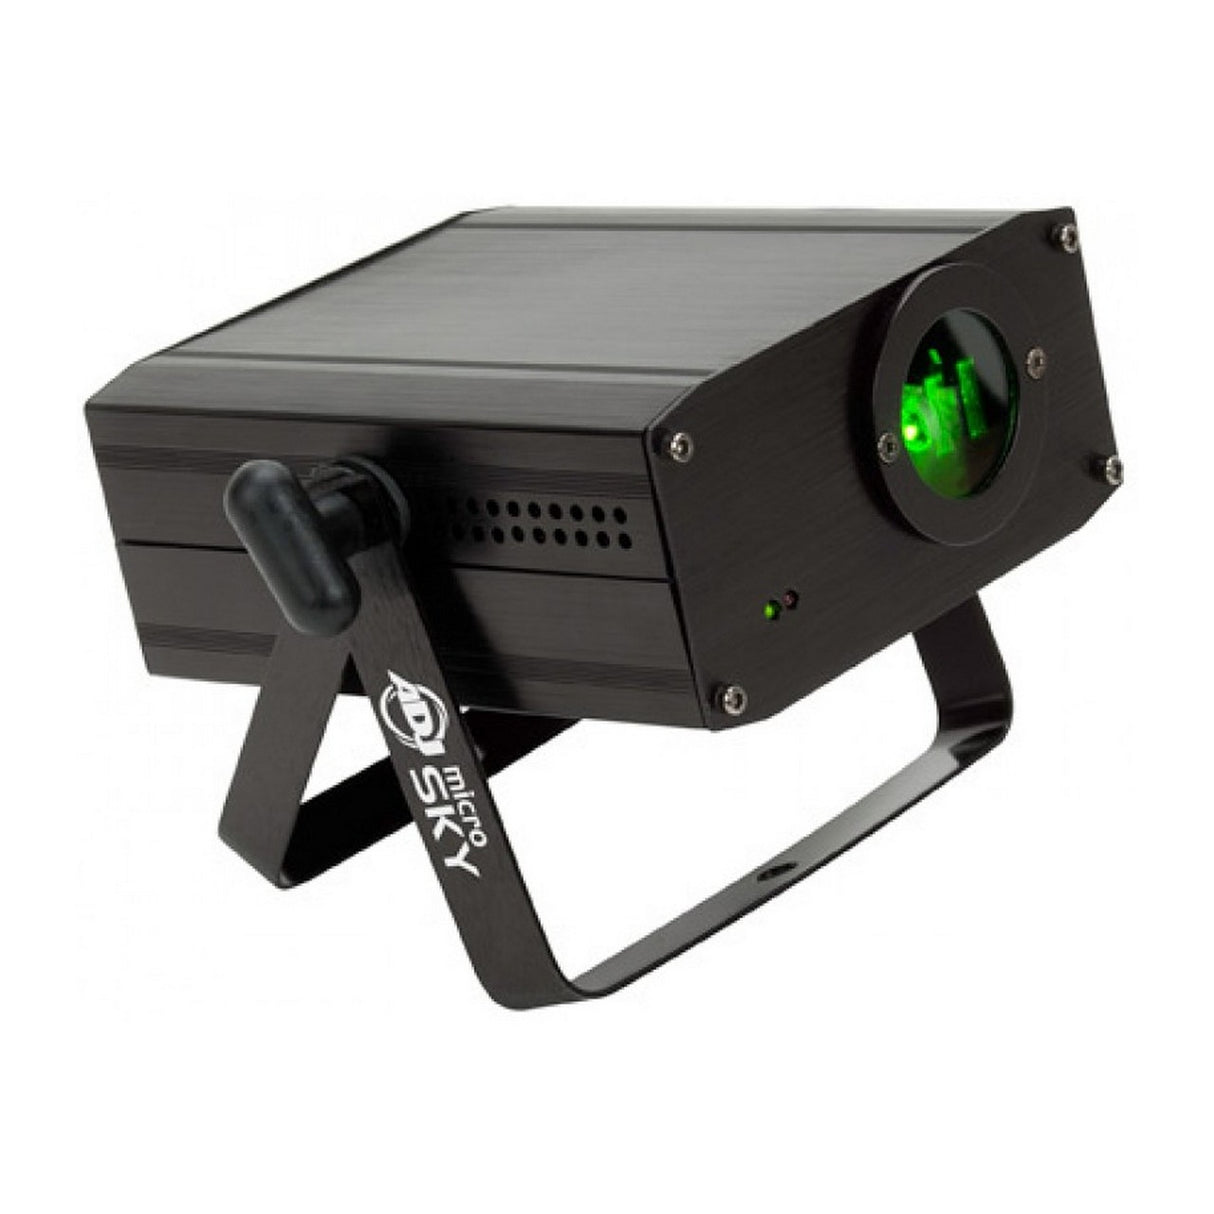 ADJ Micro Sky Green Laser Light Effects Projector (Used)